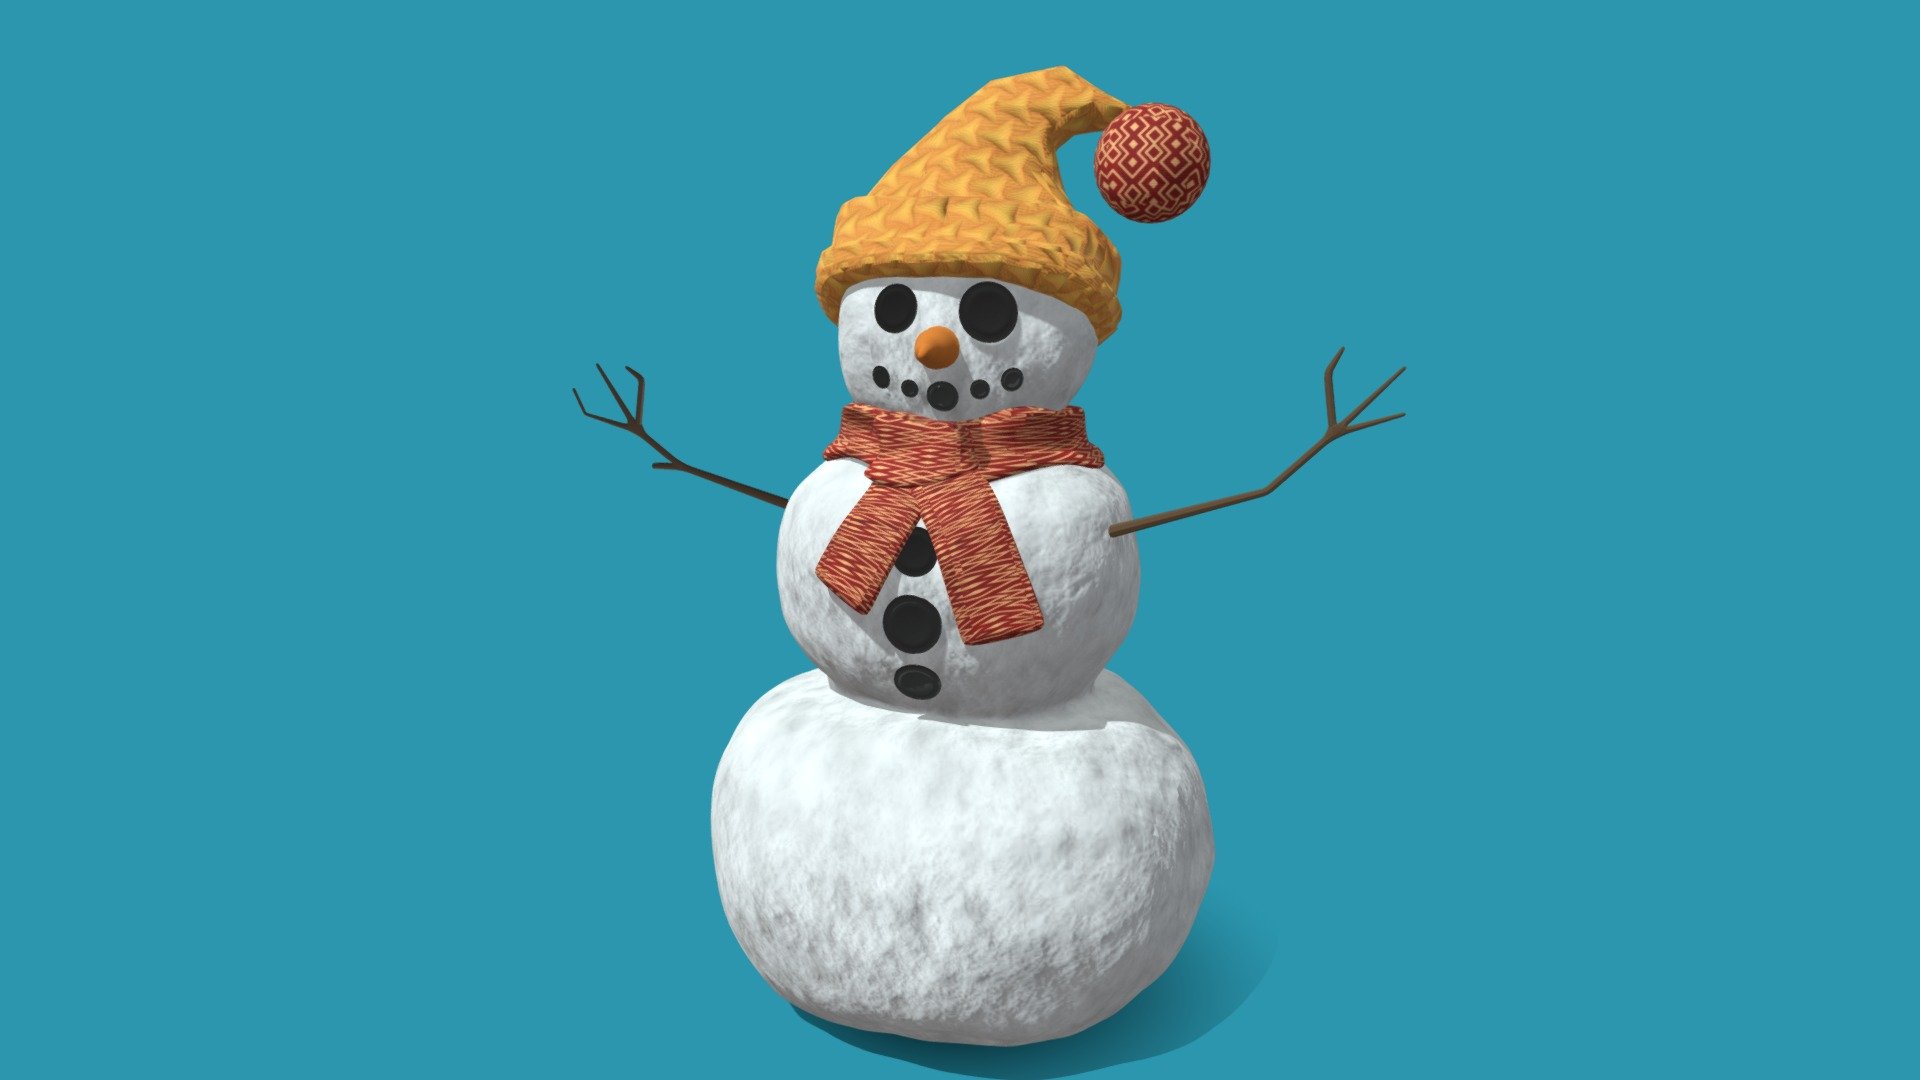 Snowman - 3D Model - Blender 
Snowman With Scarf &amp; Hat , all modeling by Blender - Snowman - 3D Model - 3D model by RiverofCreative 3d model